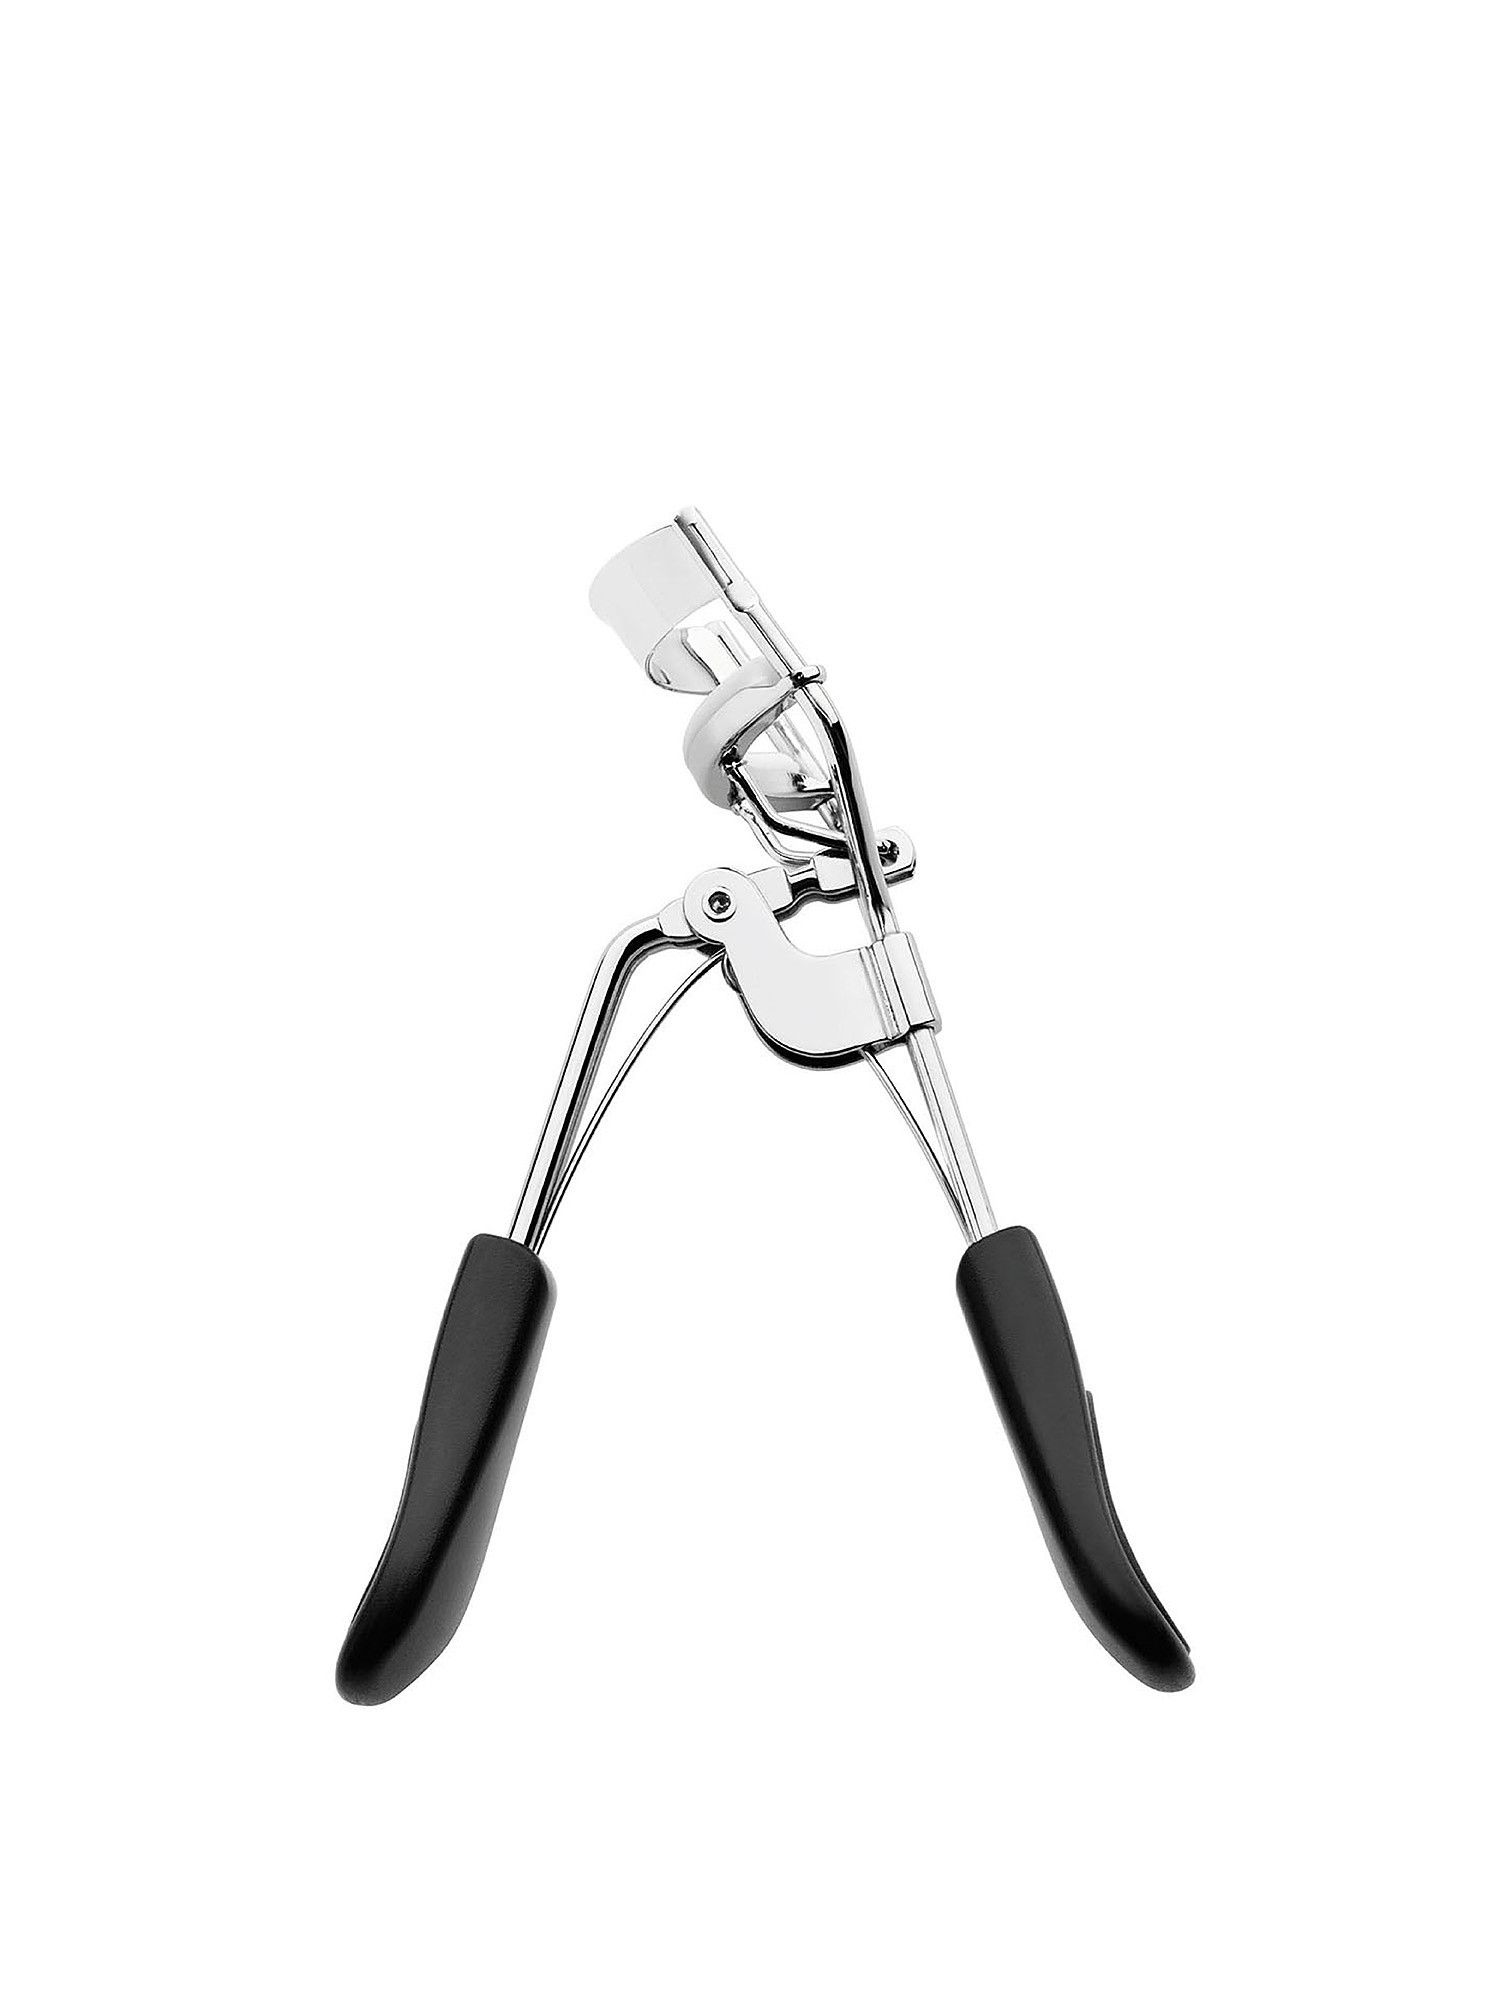 Eyelash Curler With Refills - Eyelash Curler With Refills, Black, large image number 0